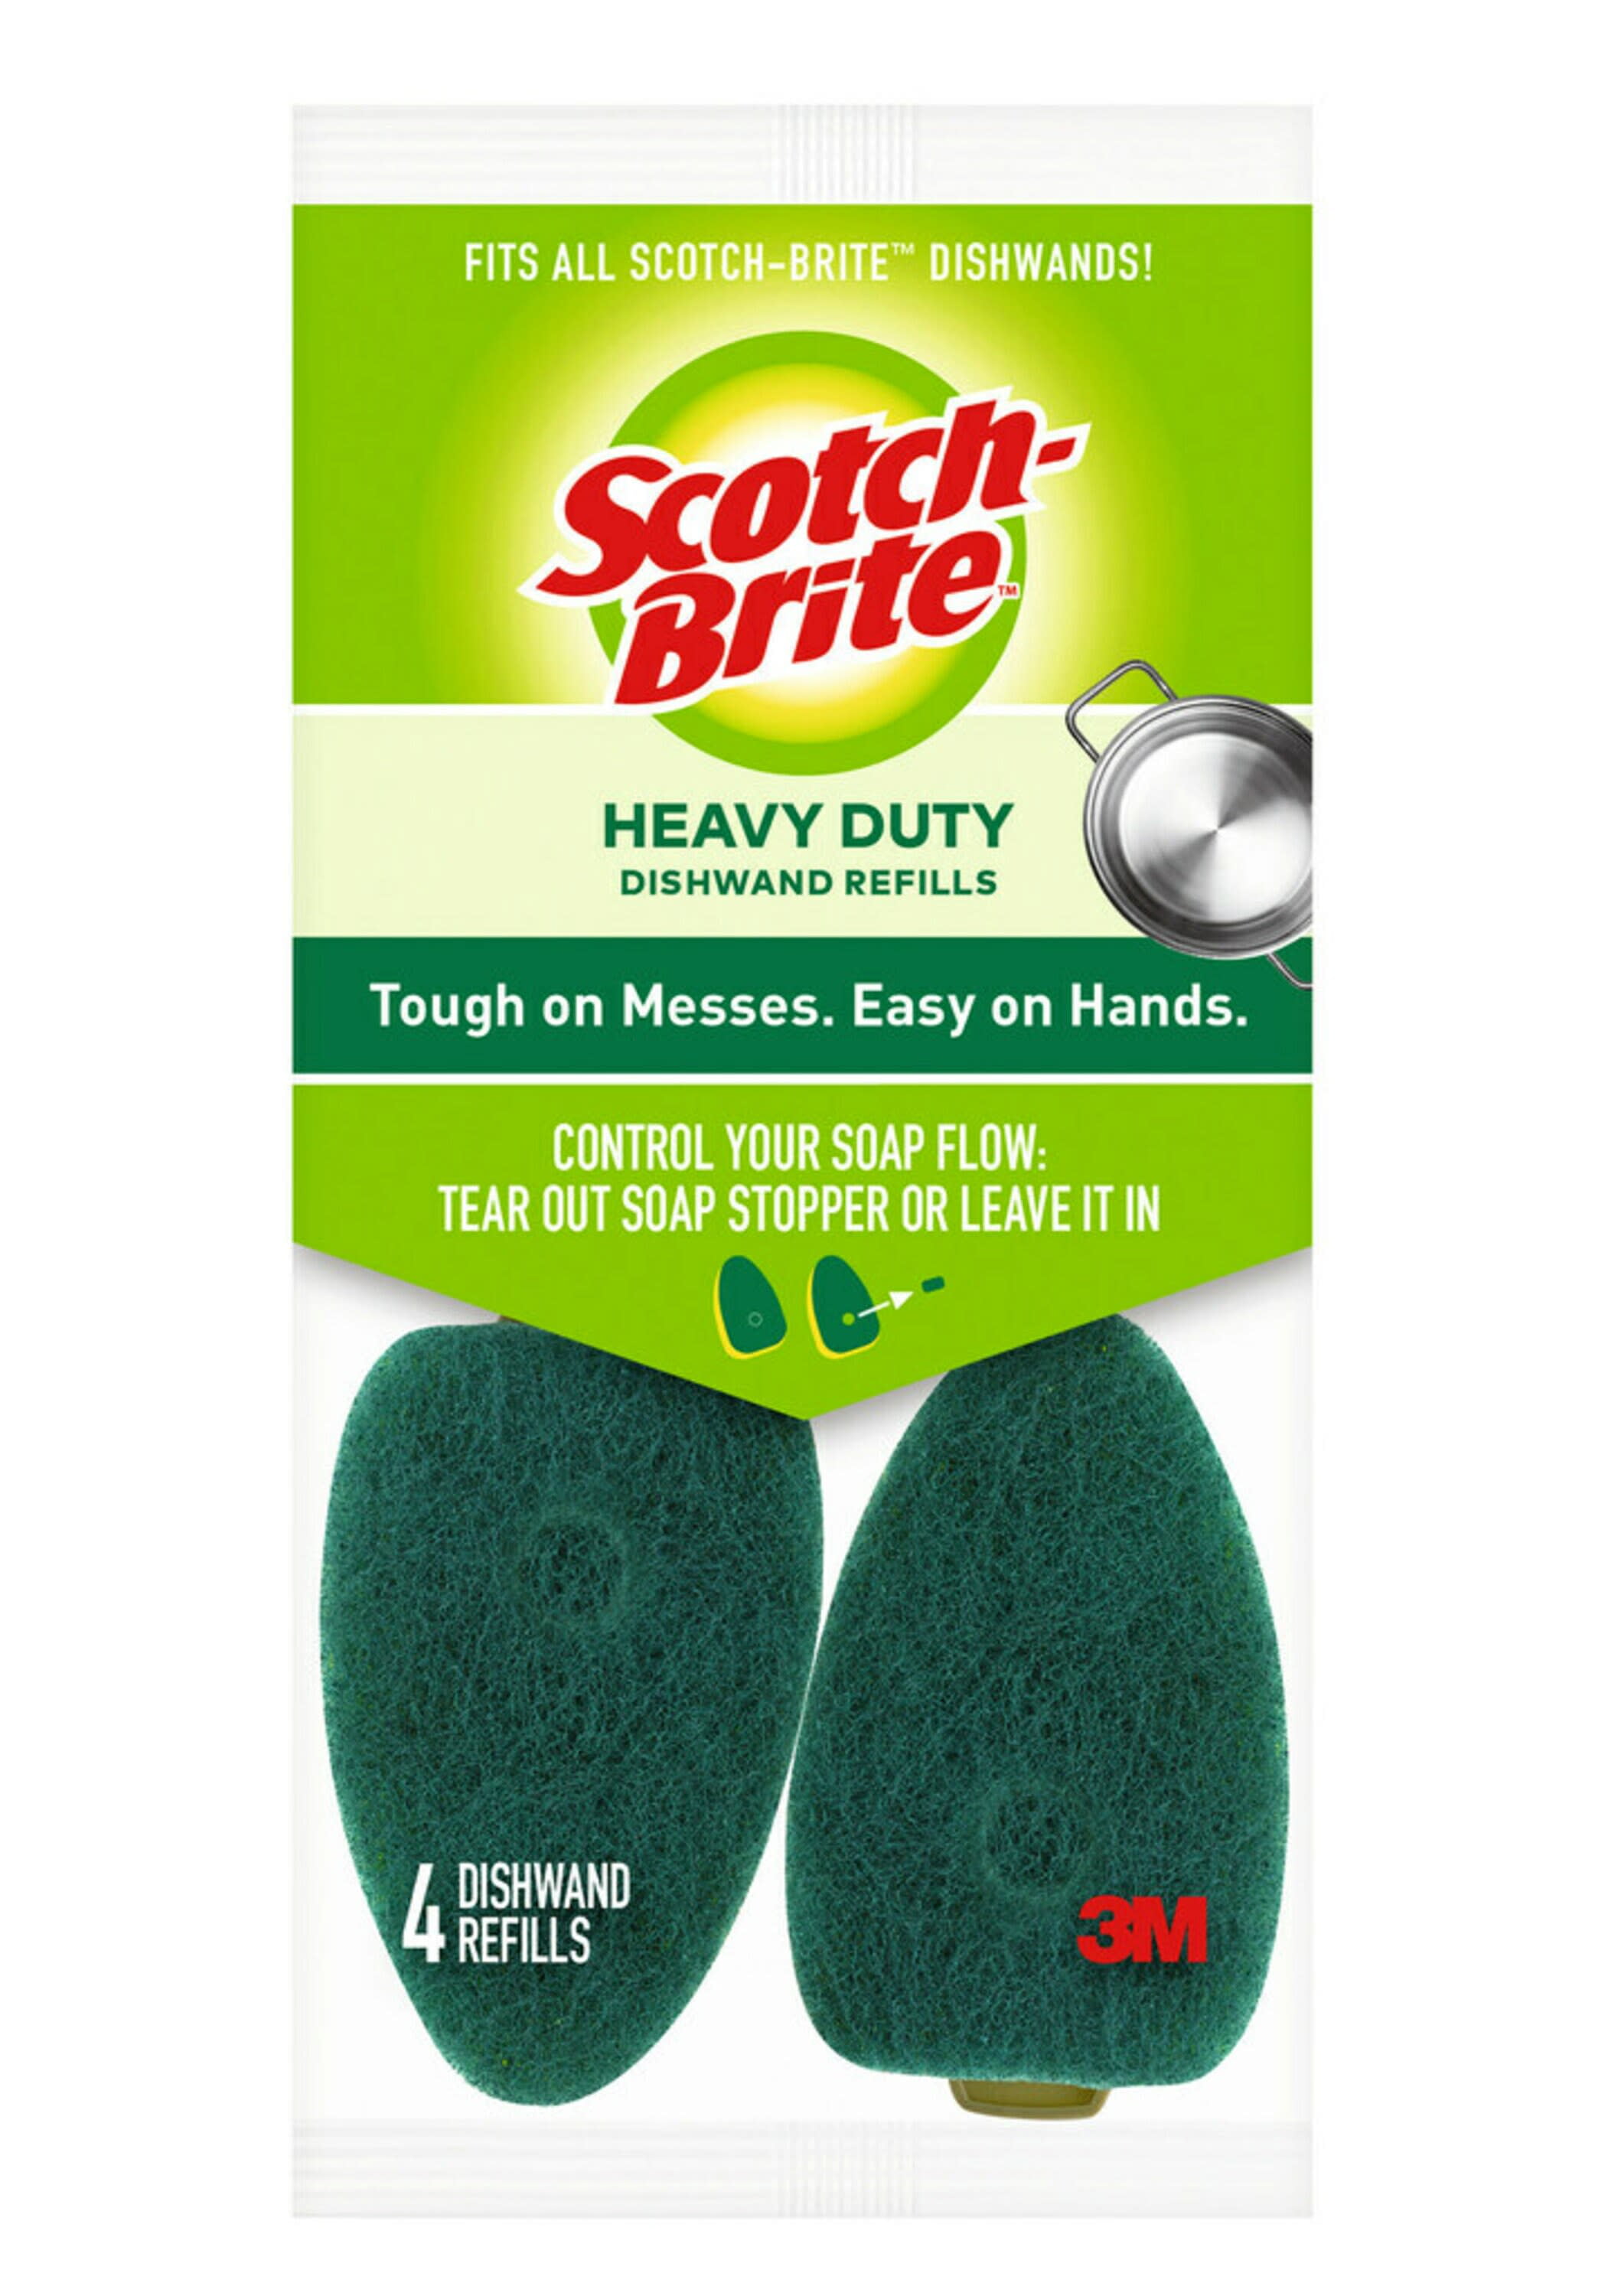 Scotch-Brite Heavy Duty Dishwand, Soap Dispensing, 1 Count